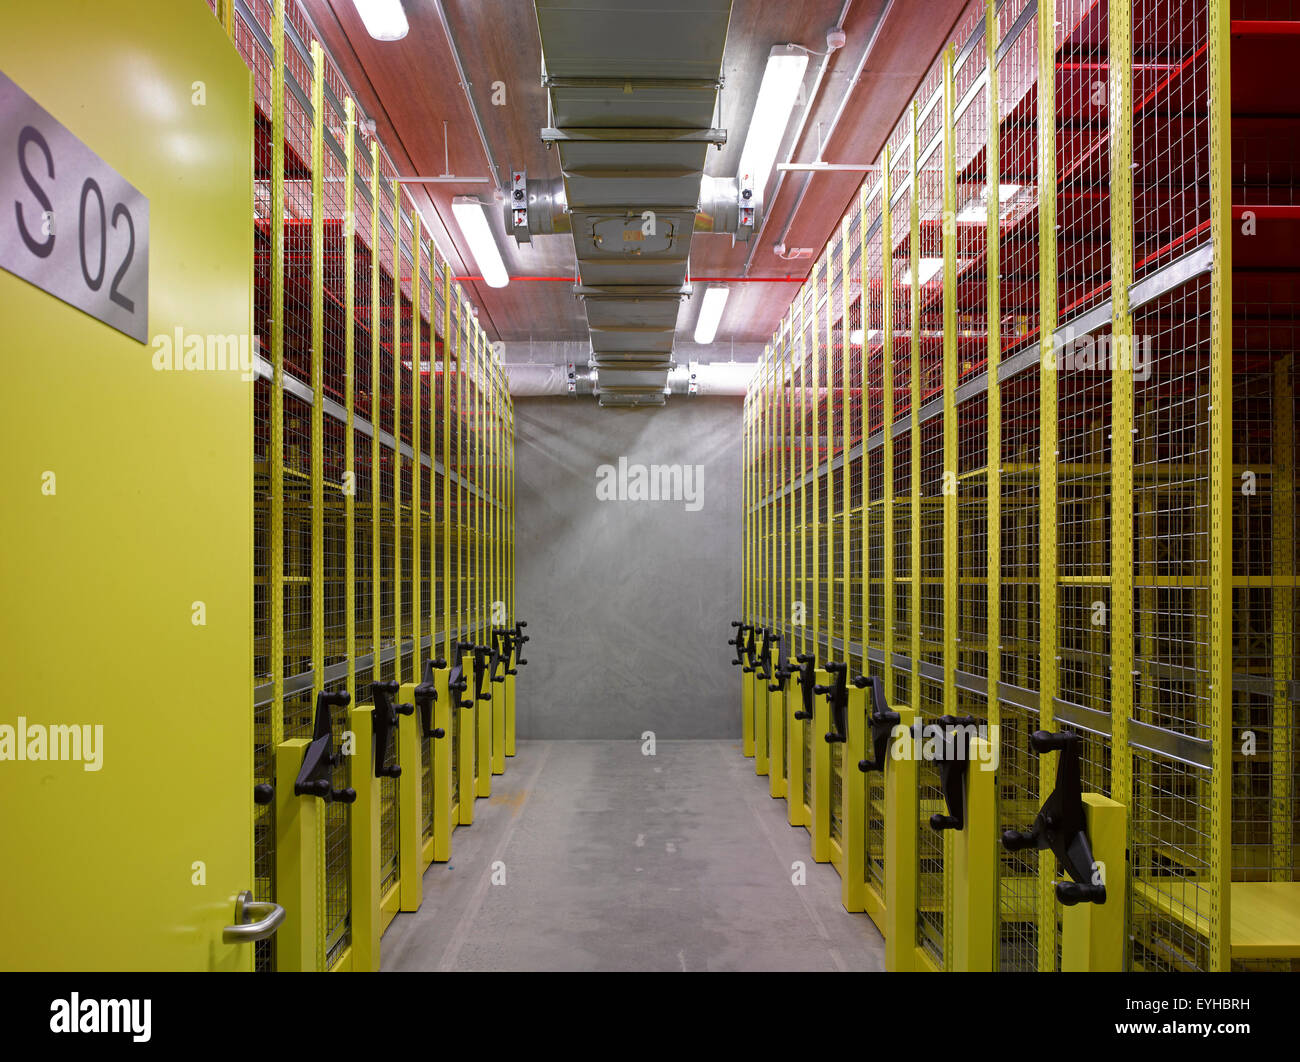 Interior view of film archive. Commerical stock portfolio (continued), na, United Kingdom. Architect: na, 2015. Stock Photo